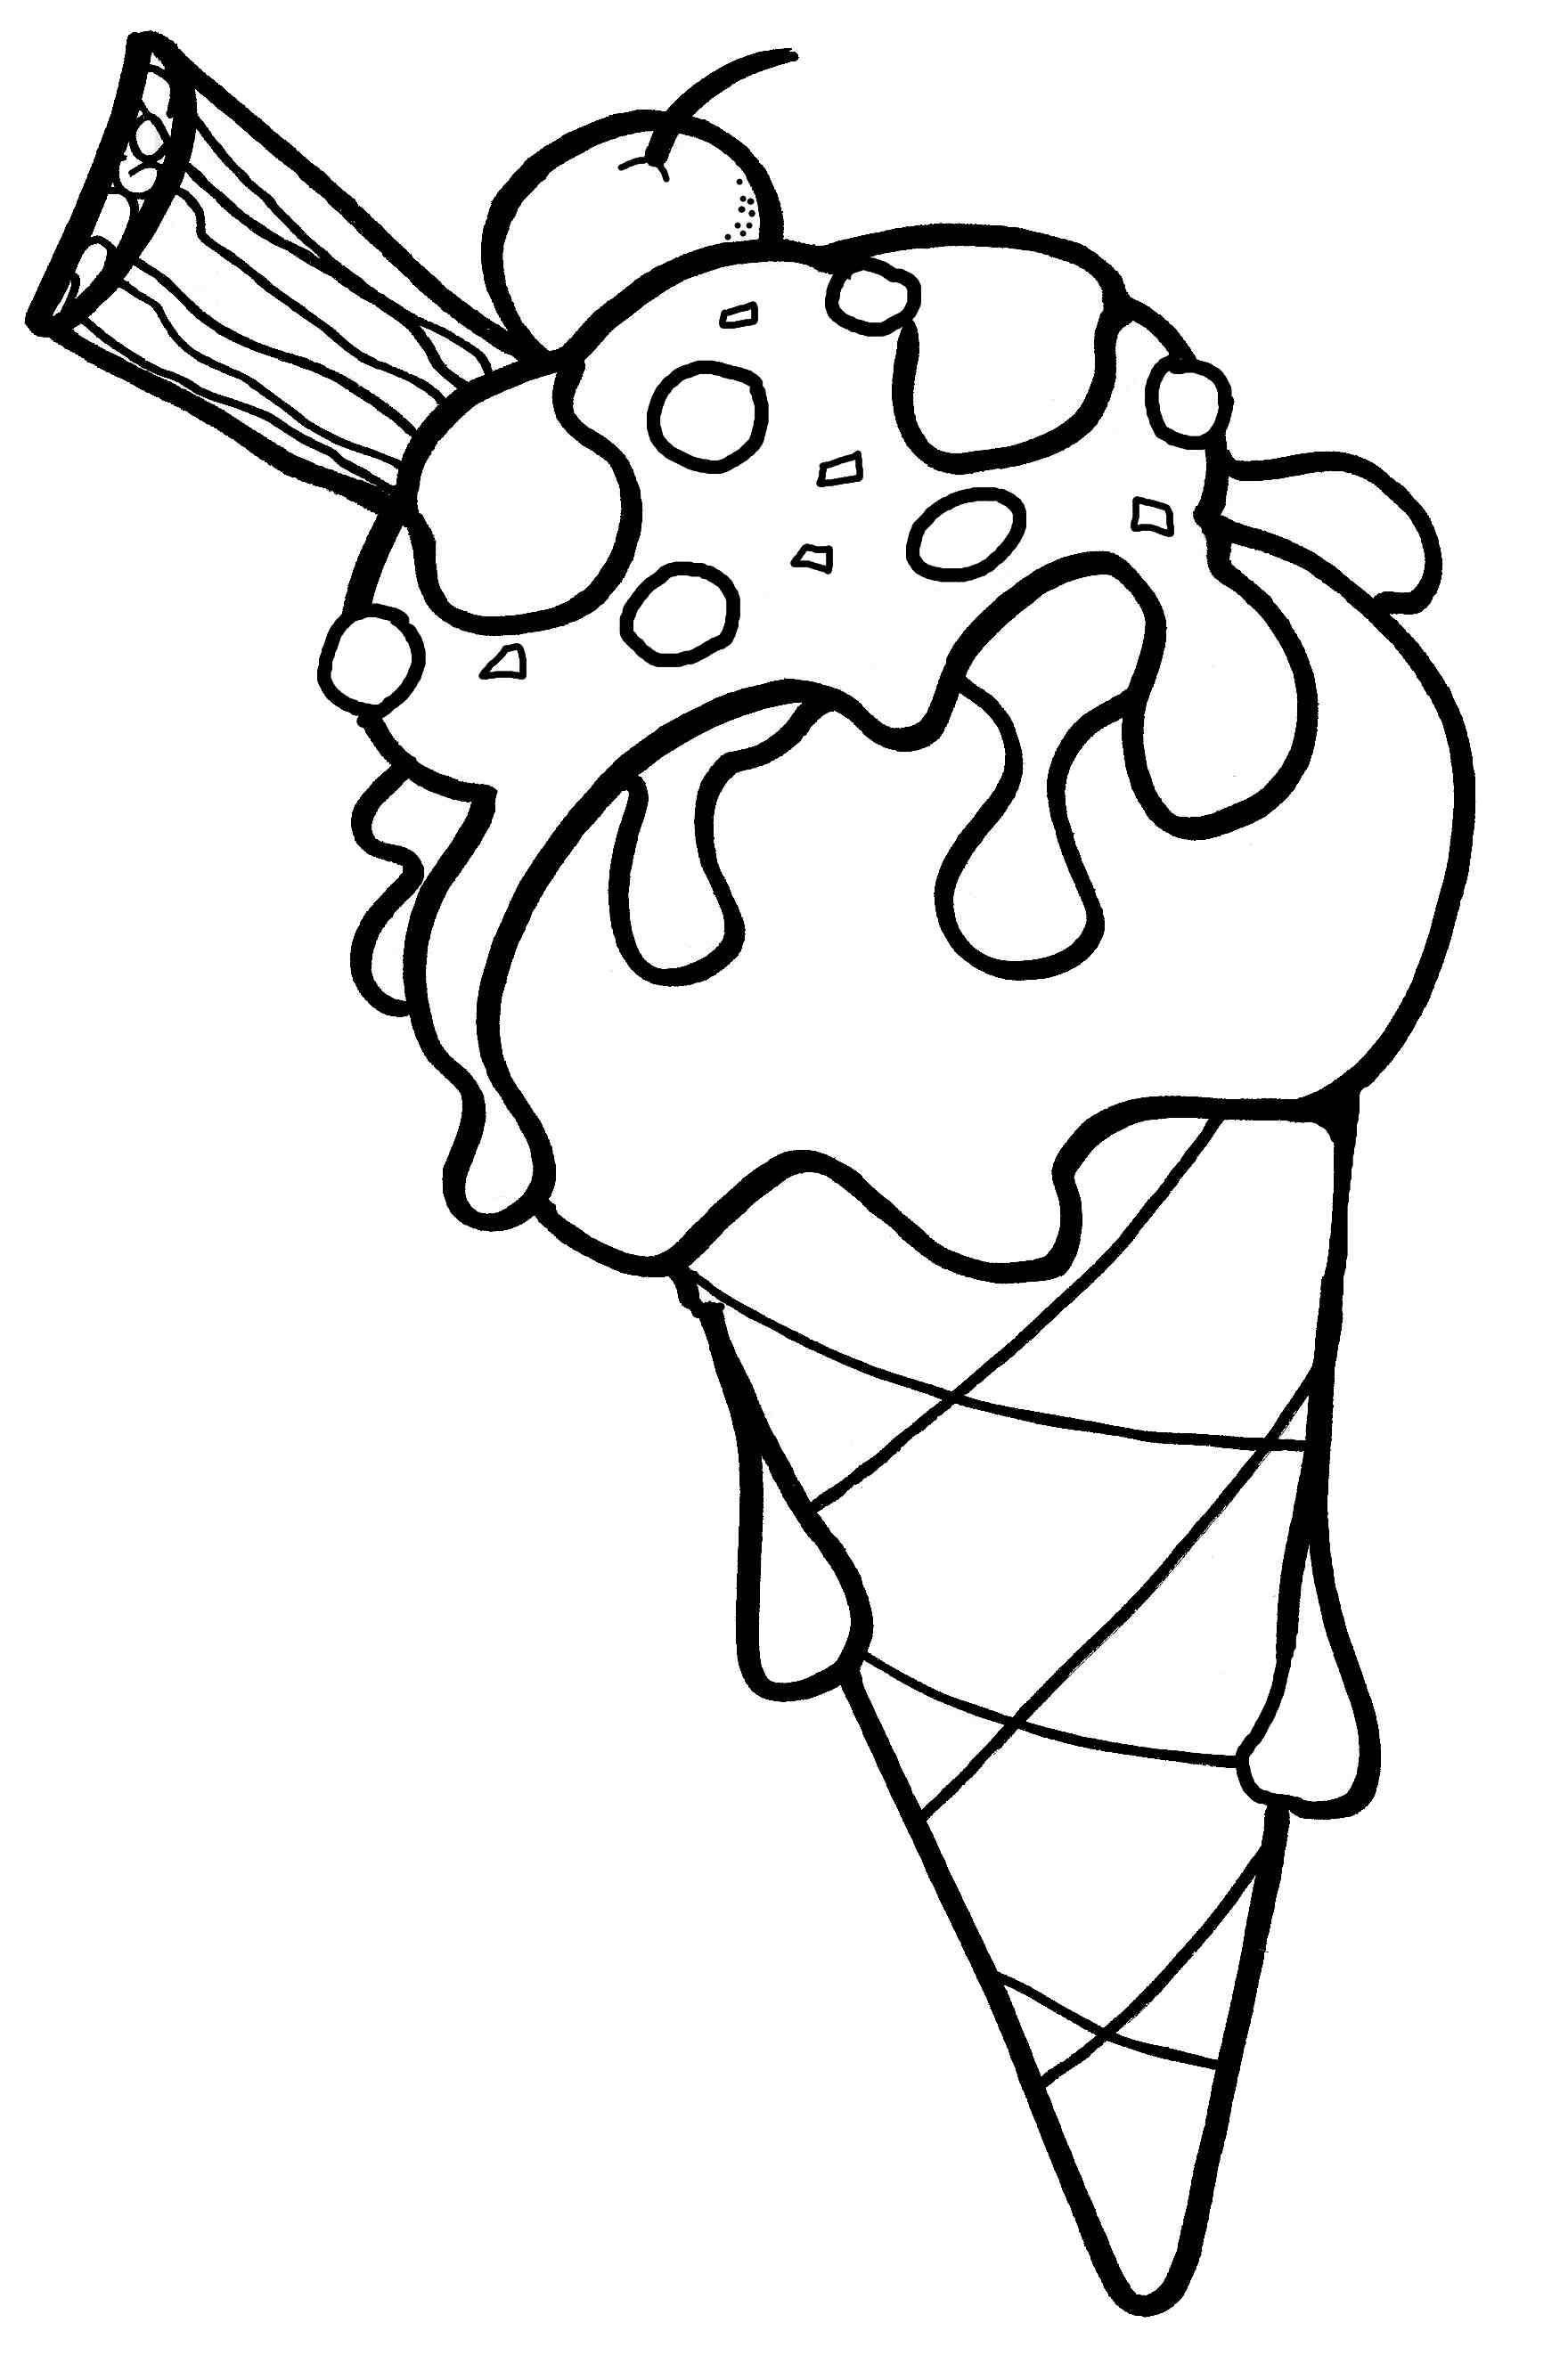 Раскраска мороженки. Раскраска мороженое. Раскраска для девочек мороженое. Мороженое раскраска для детей. Раскраски сладости мороженое.